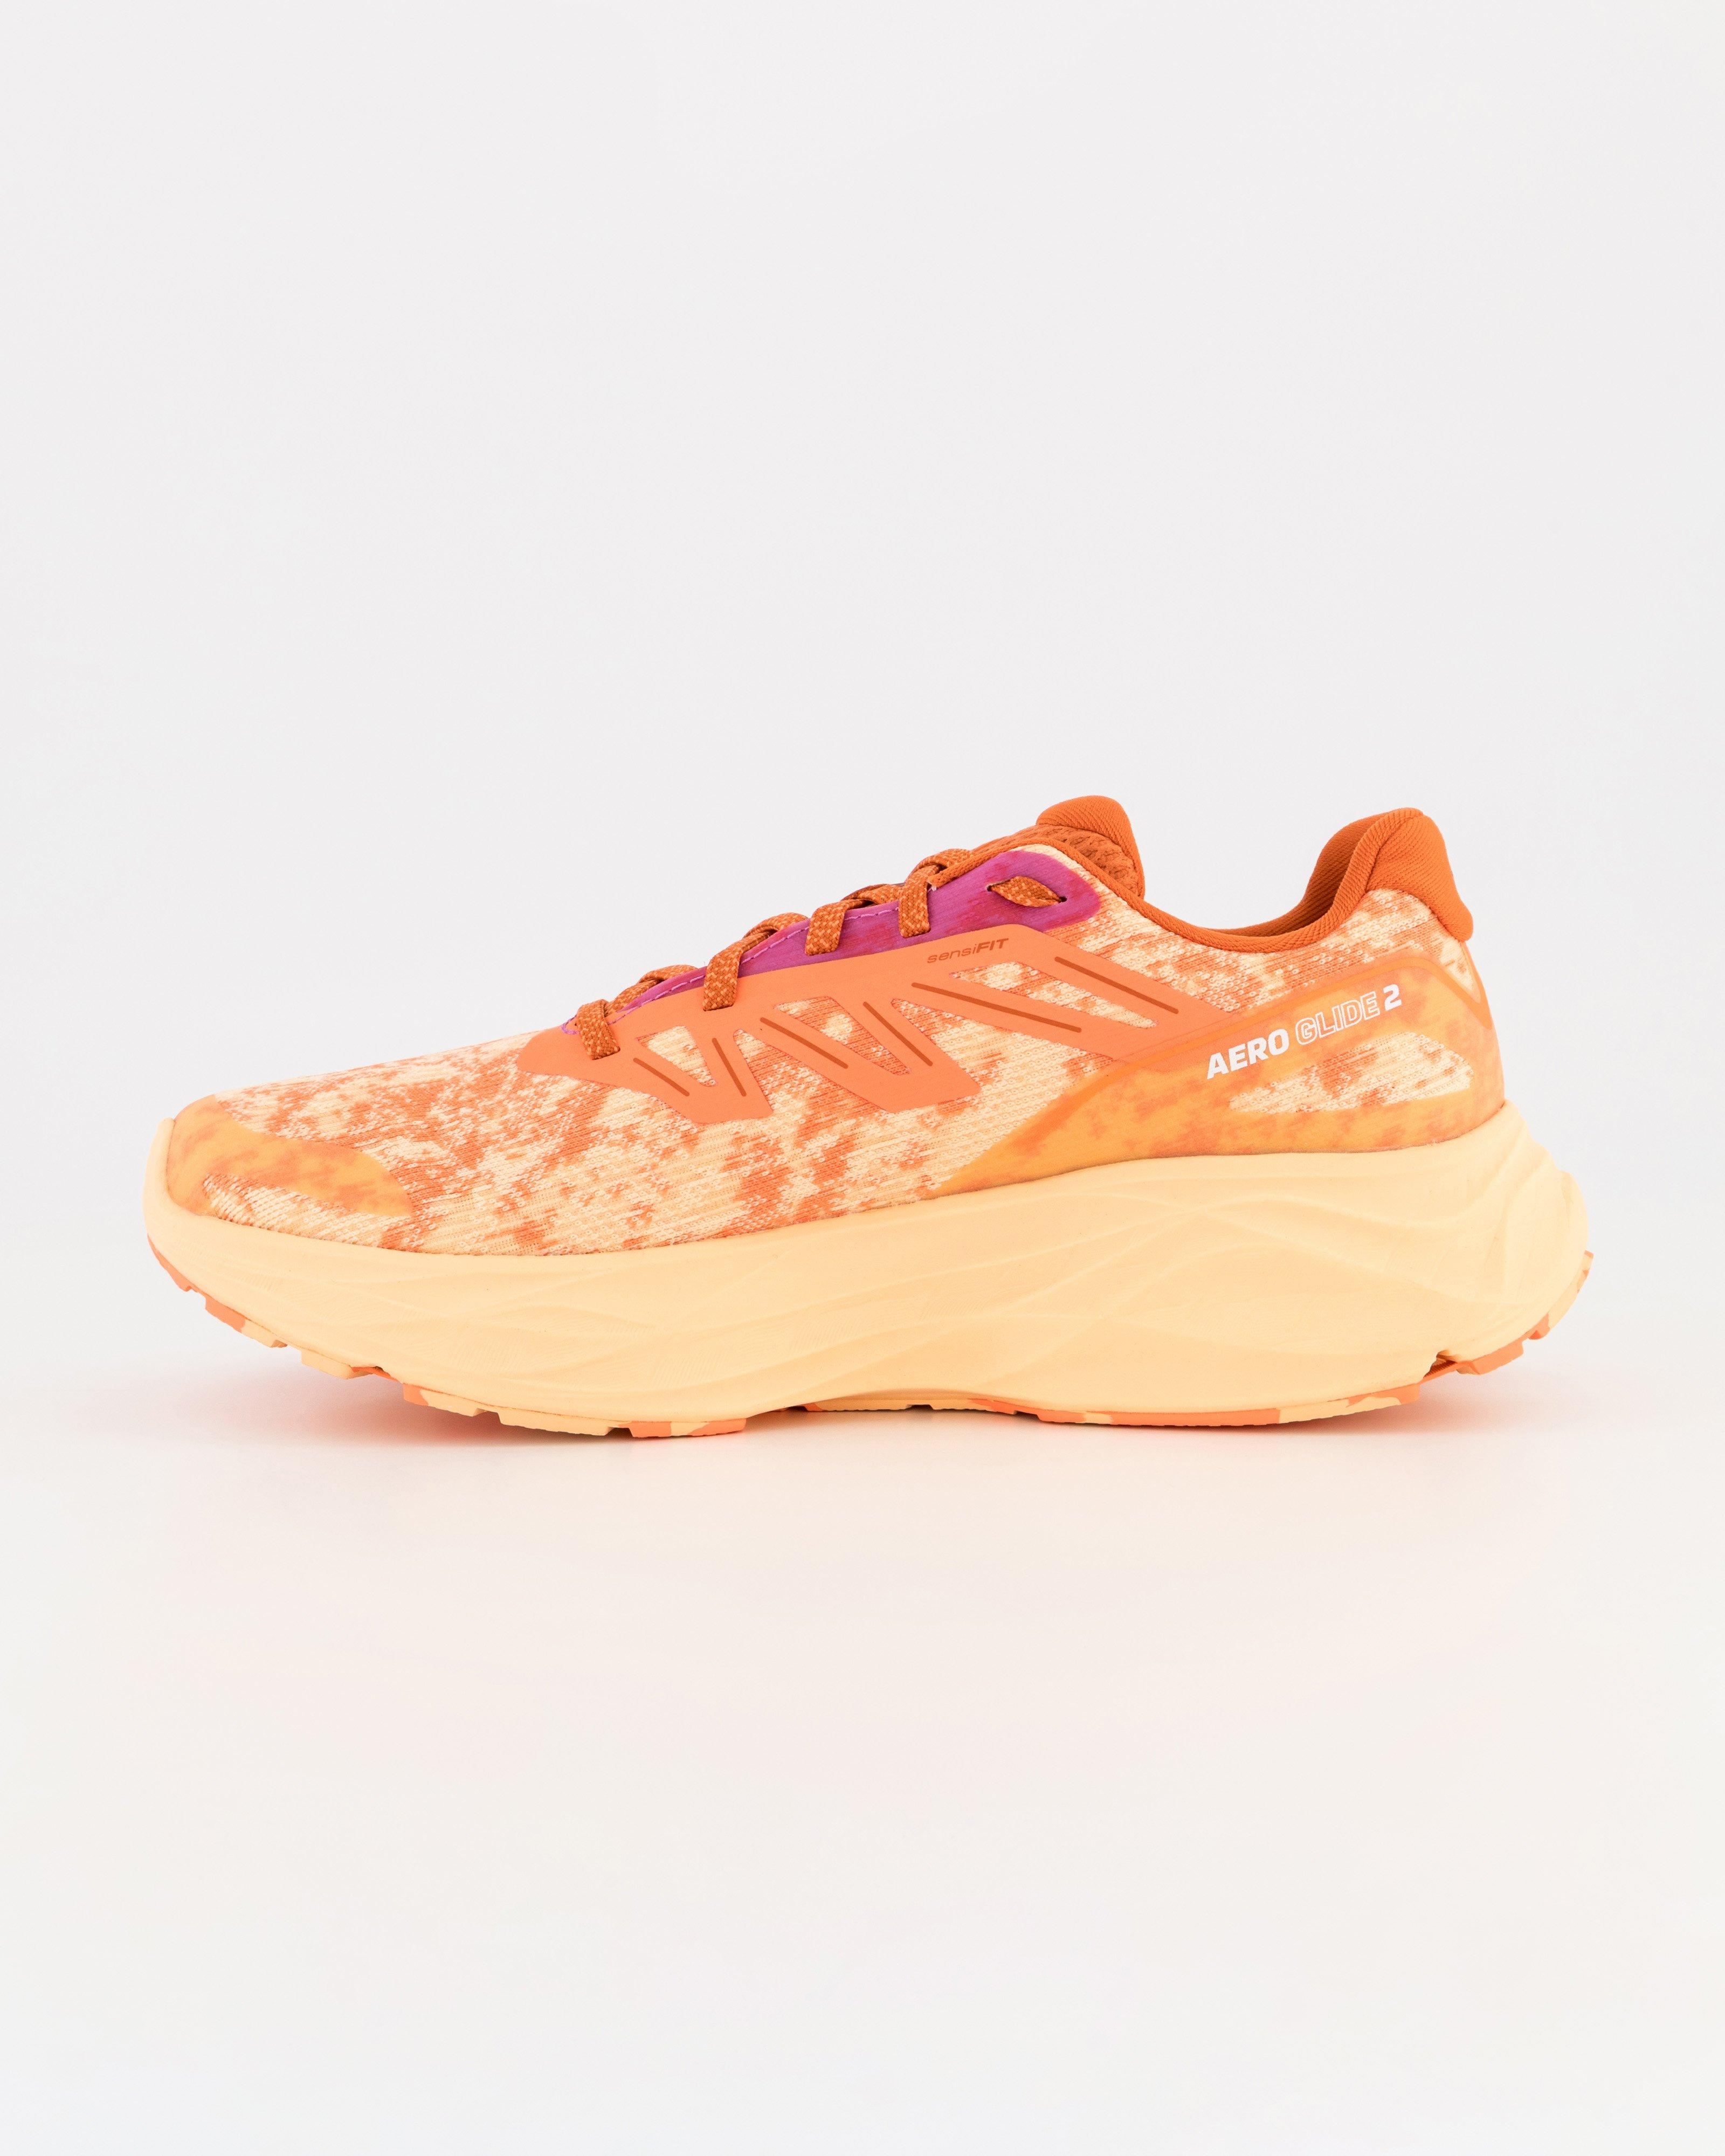 Salomon Women’s Aero Glide 2 Road Running Shoes  -  Coral